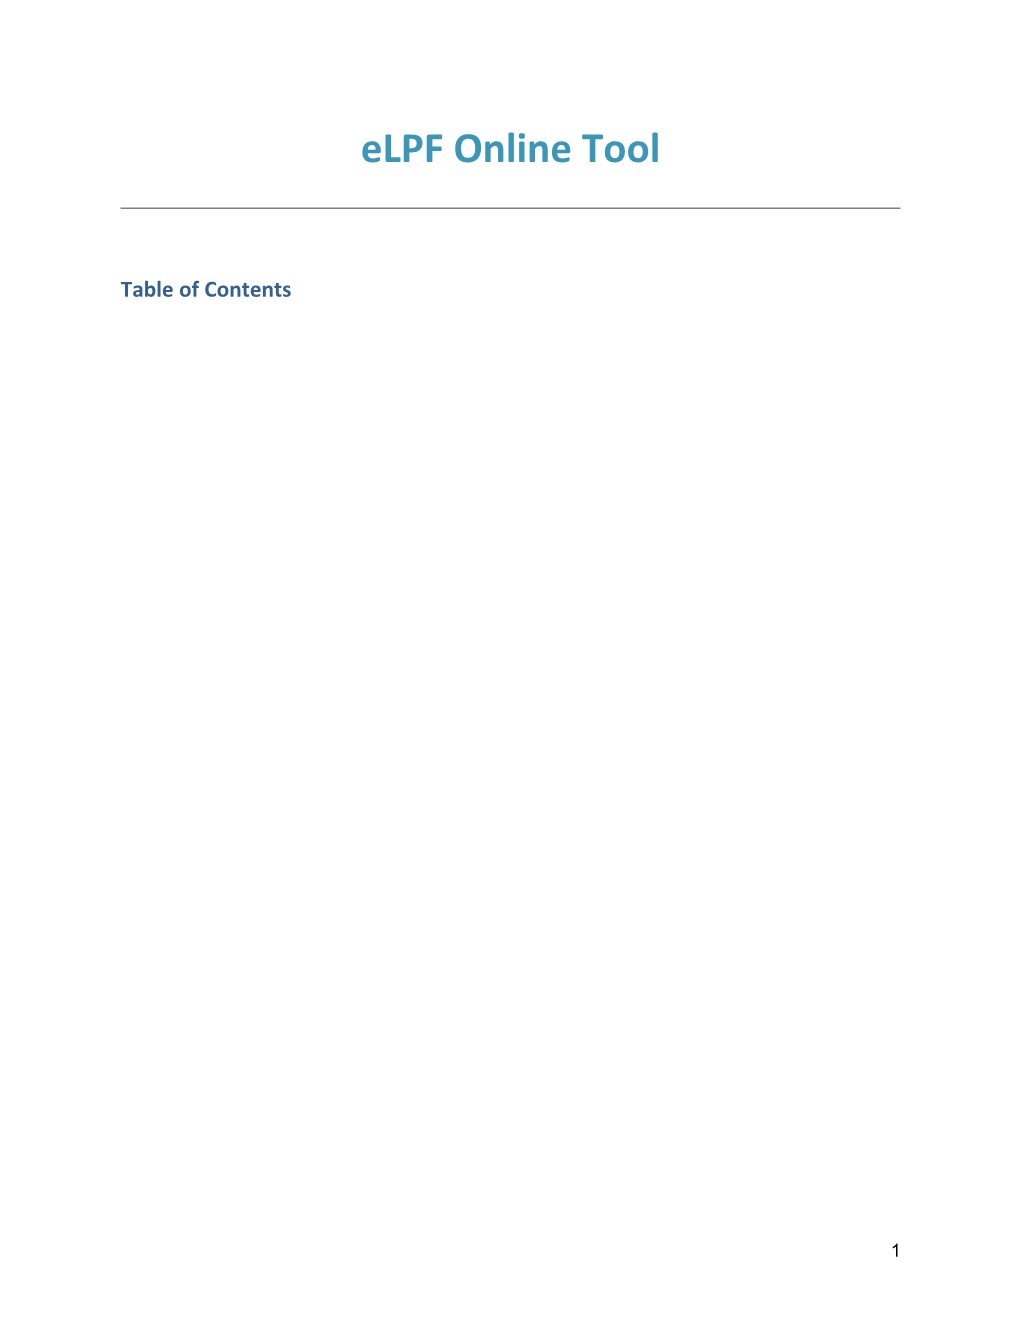 Elpf Online Tool Instructions